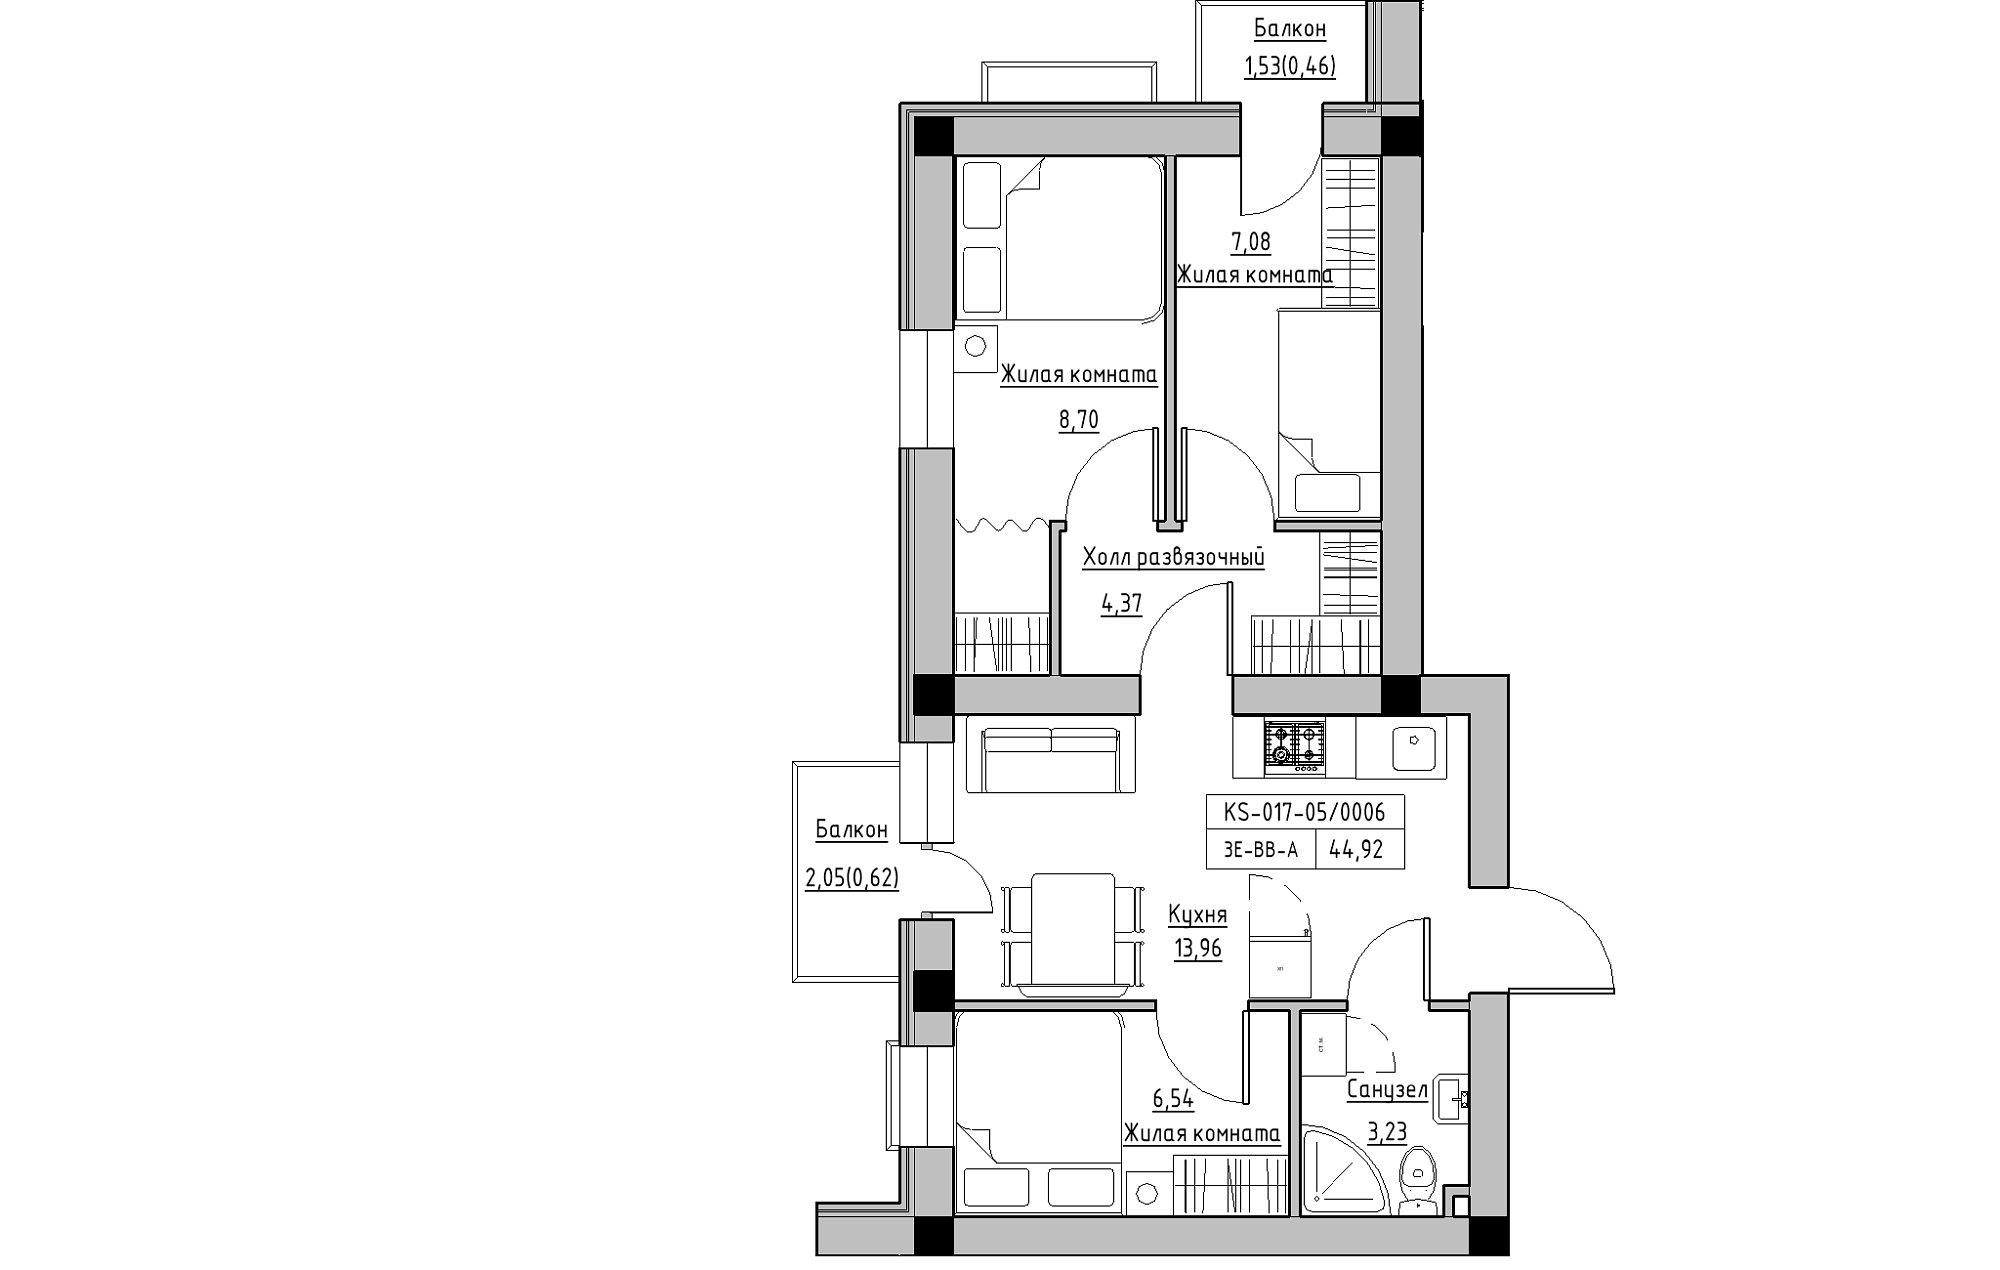 Planning 3-rm flats area 44.92m2, KS-017-05/0006.